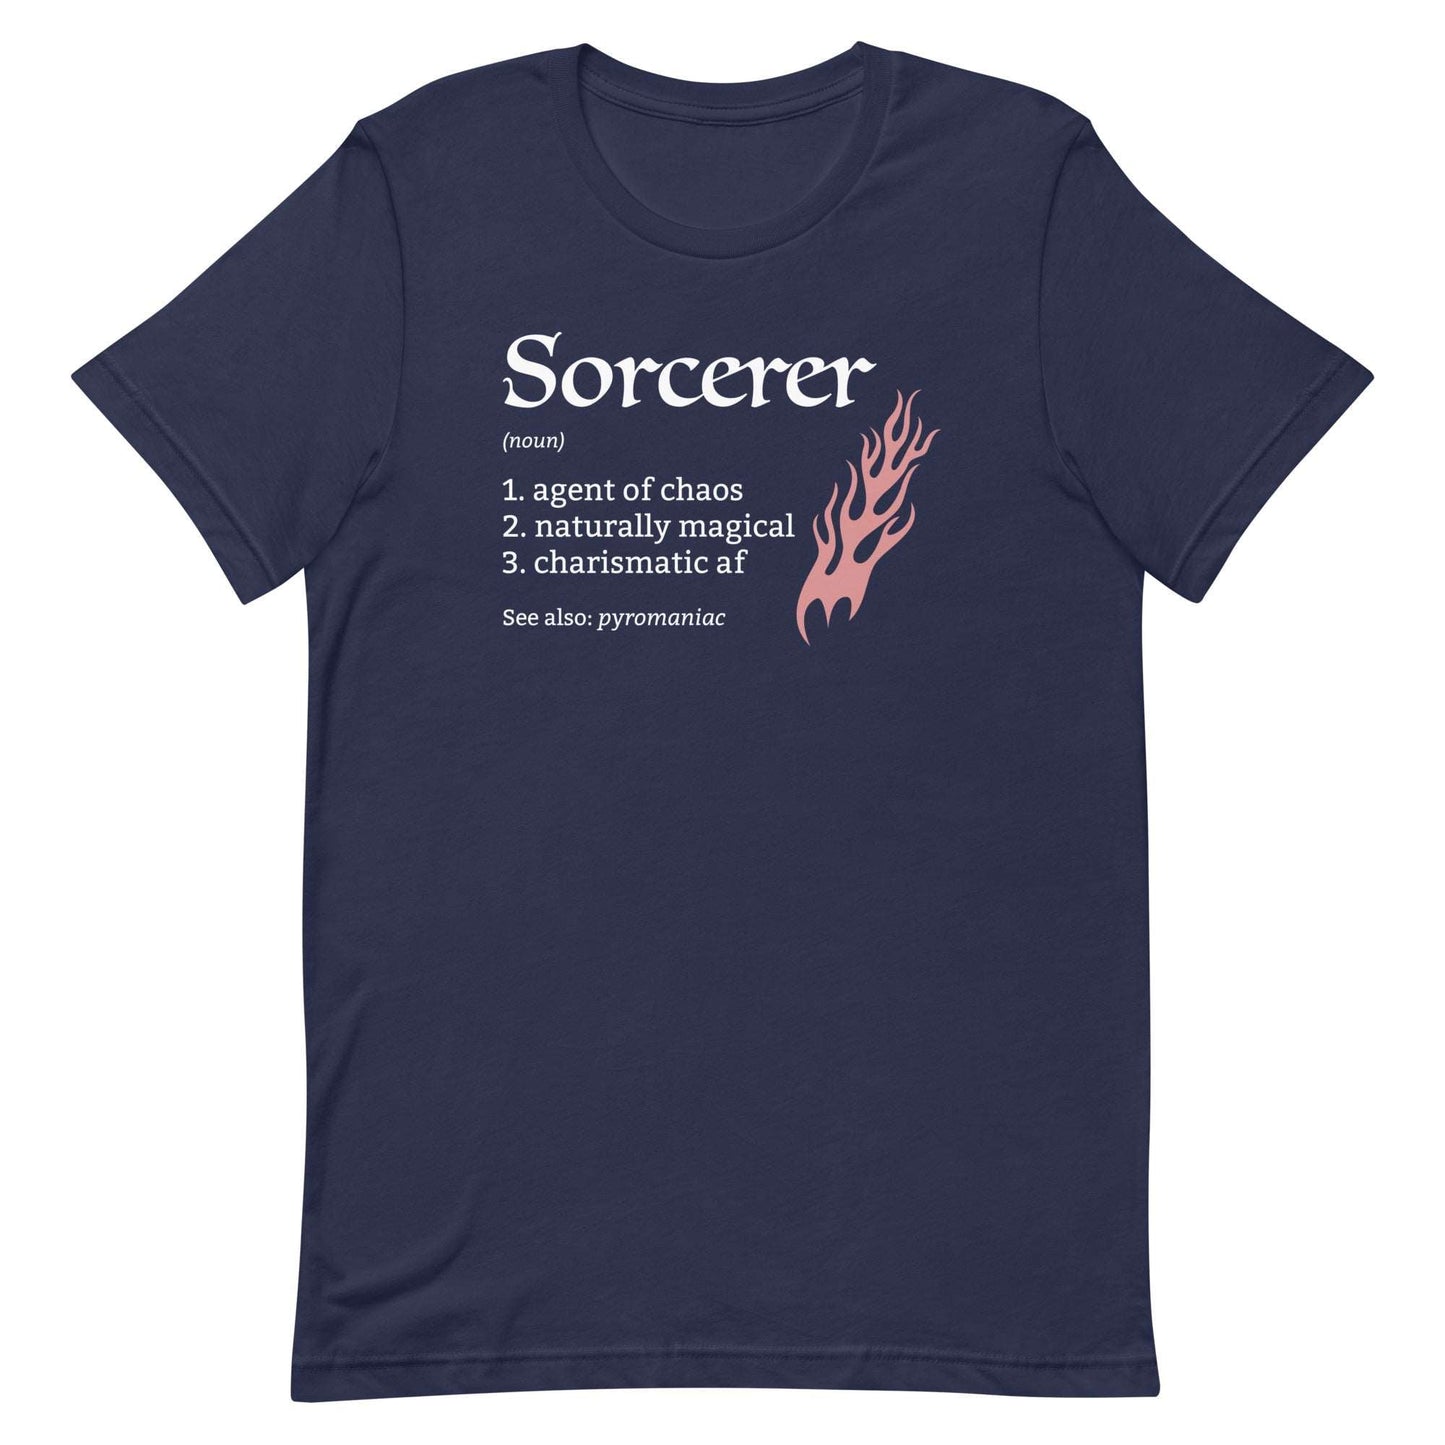 Sorcerer Class Definition T-Shirt – Funny DnD Definition Tee T-Shirt Navy / S